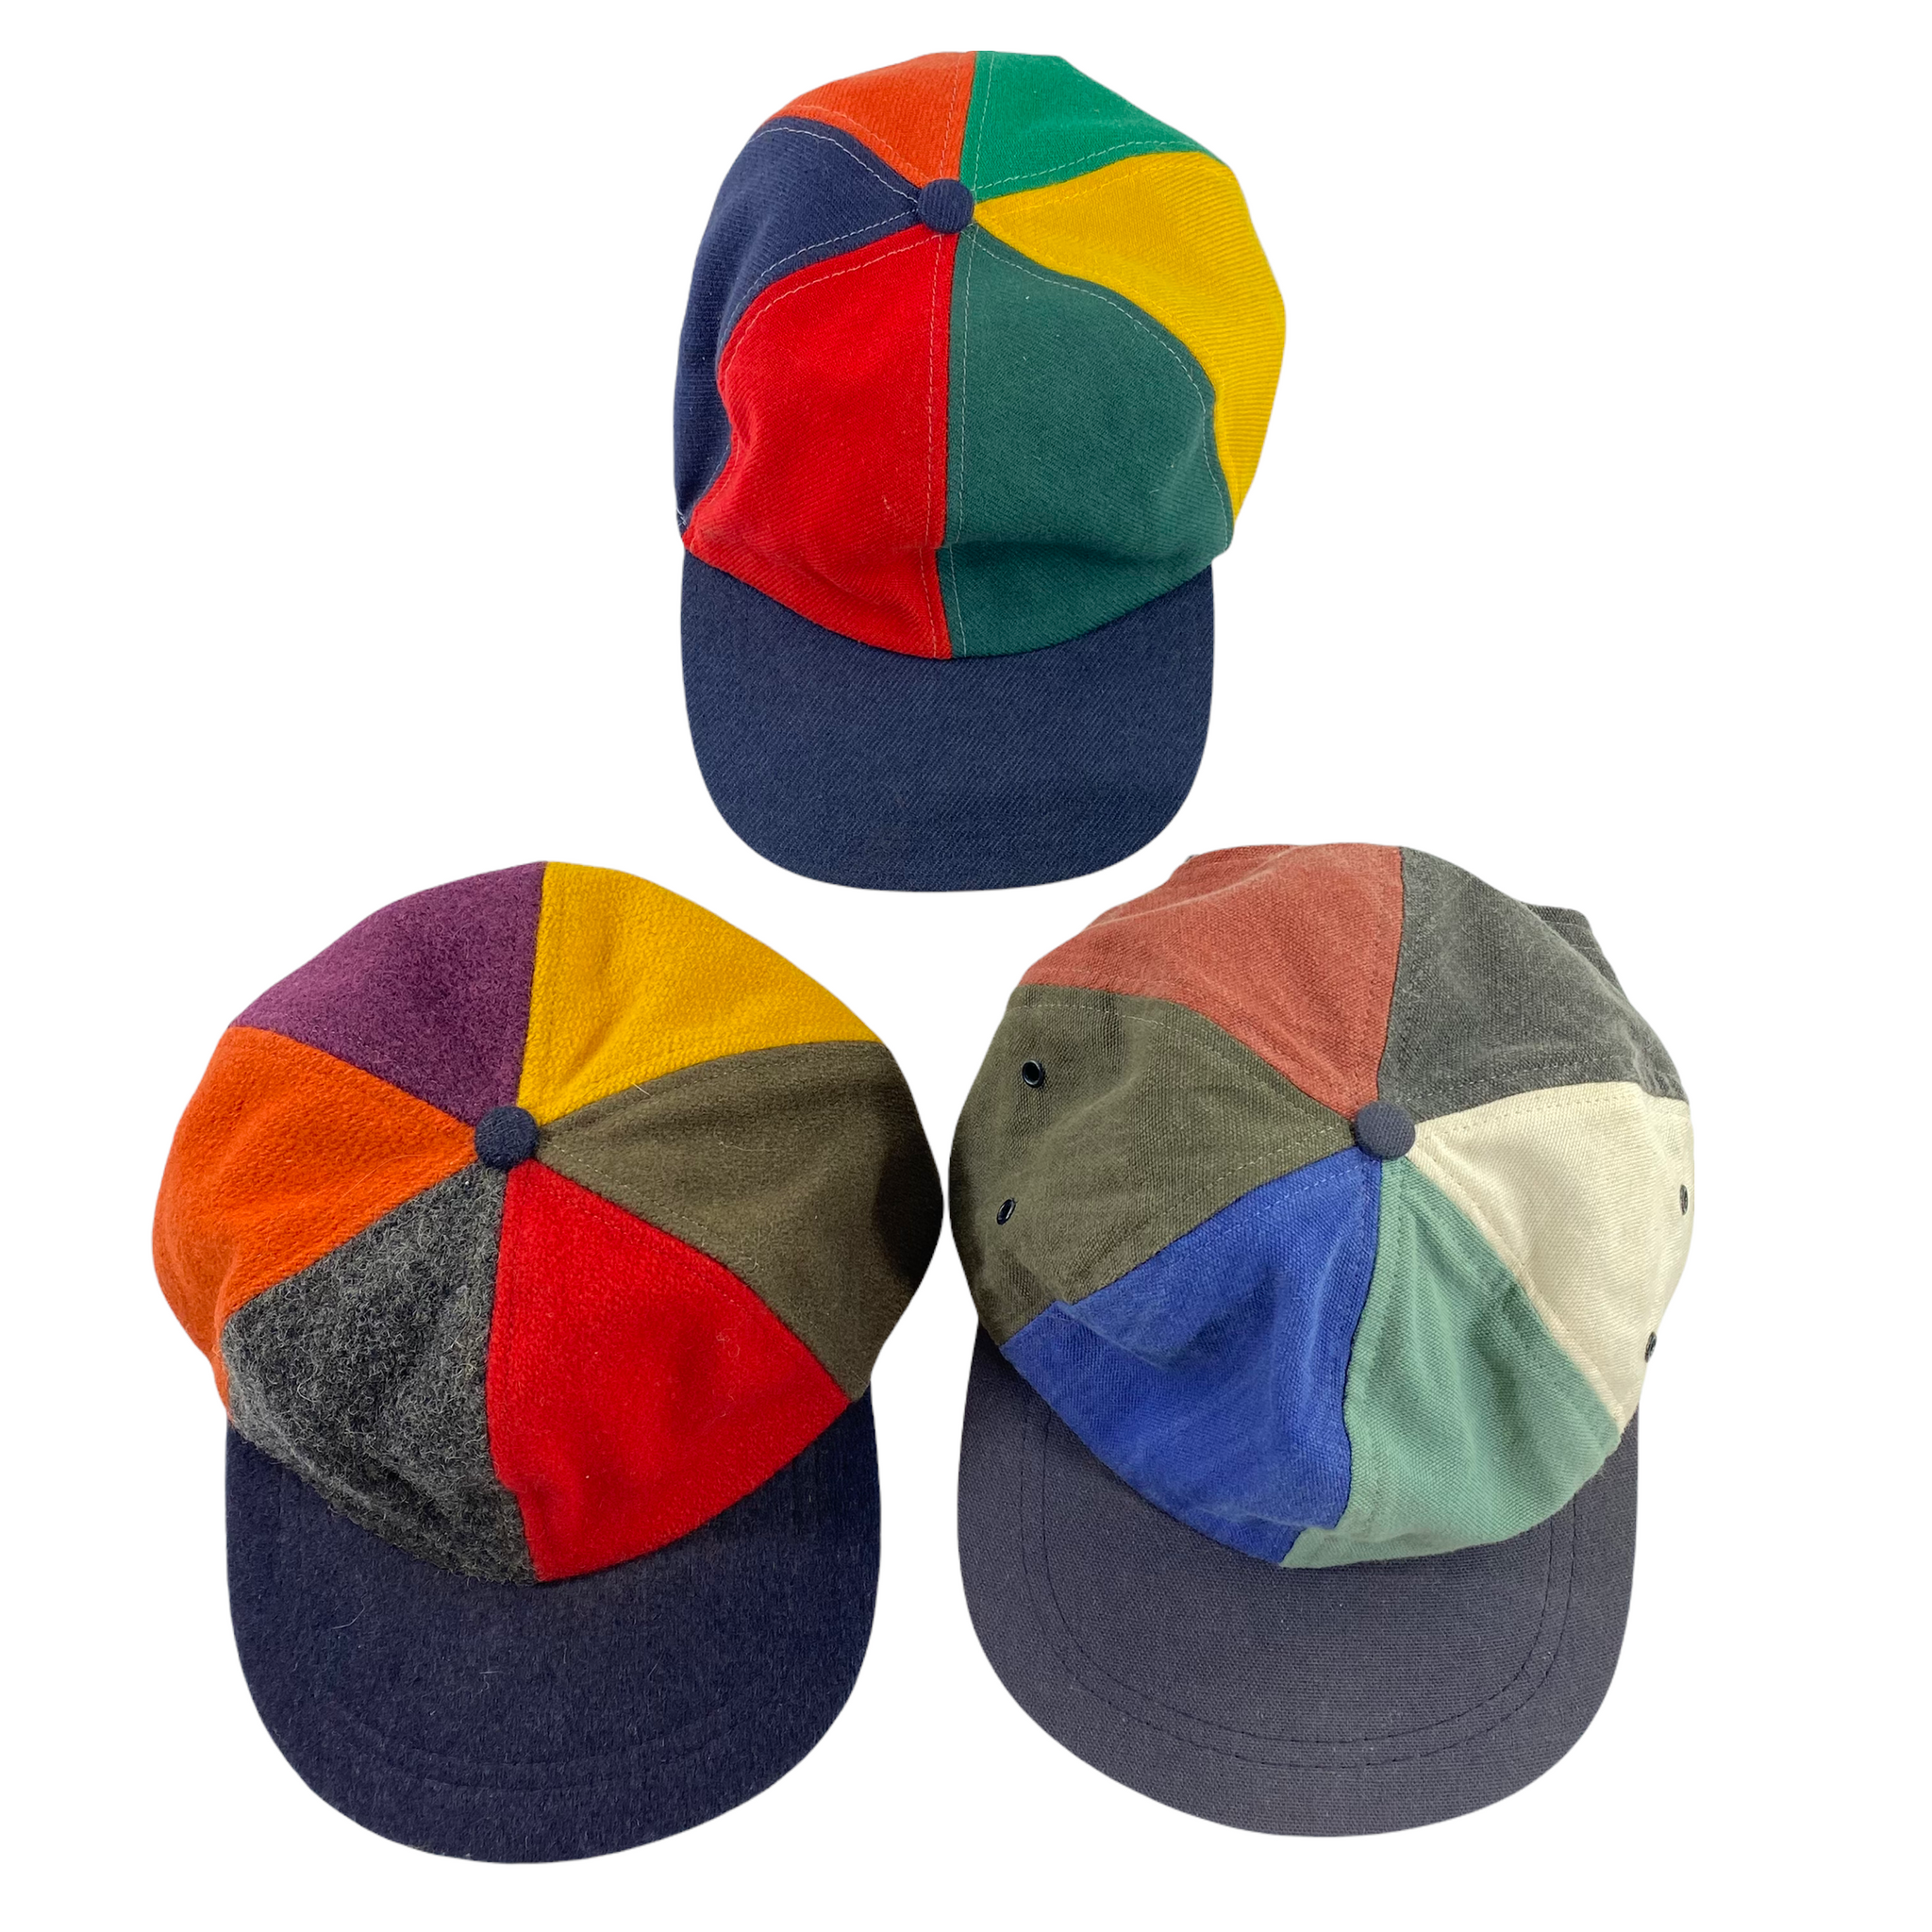 Pinwheel hats